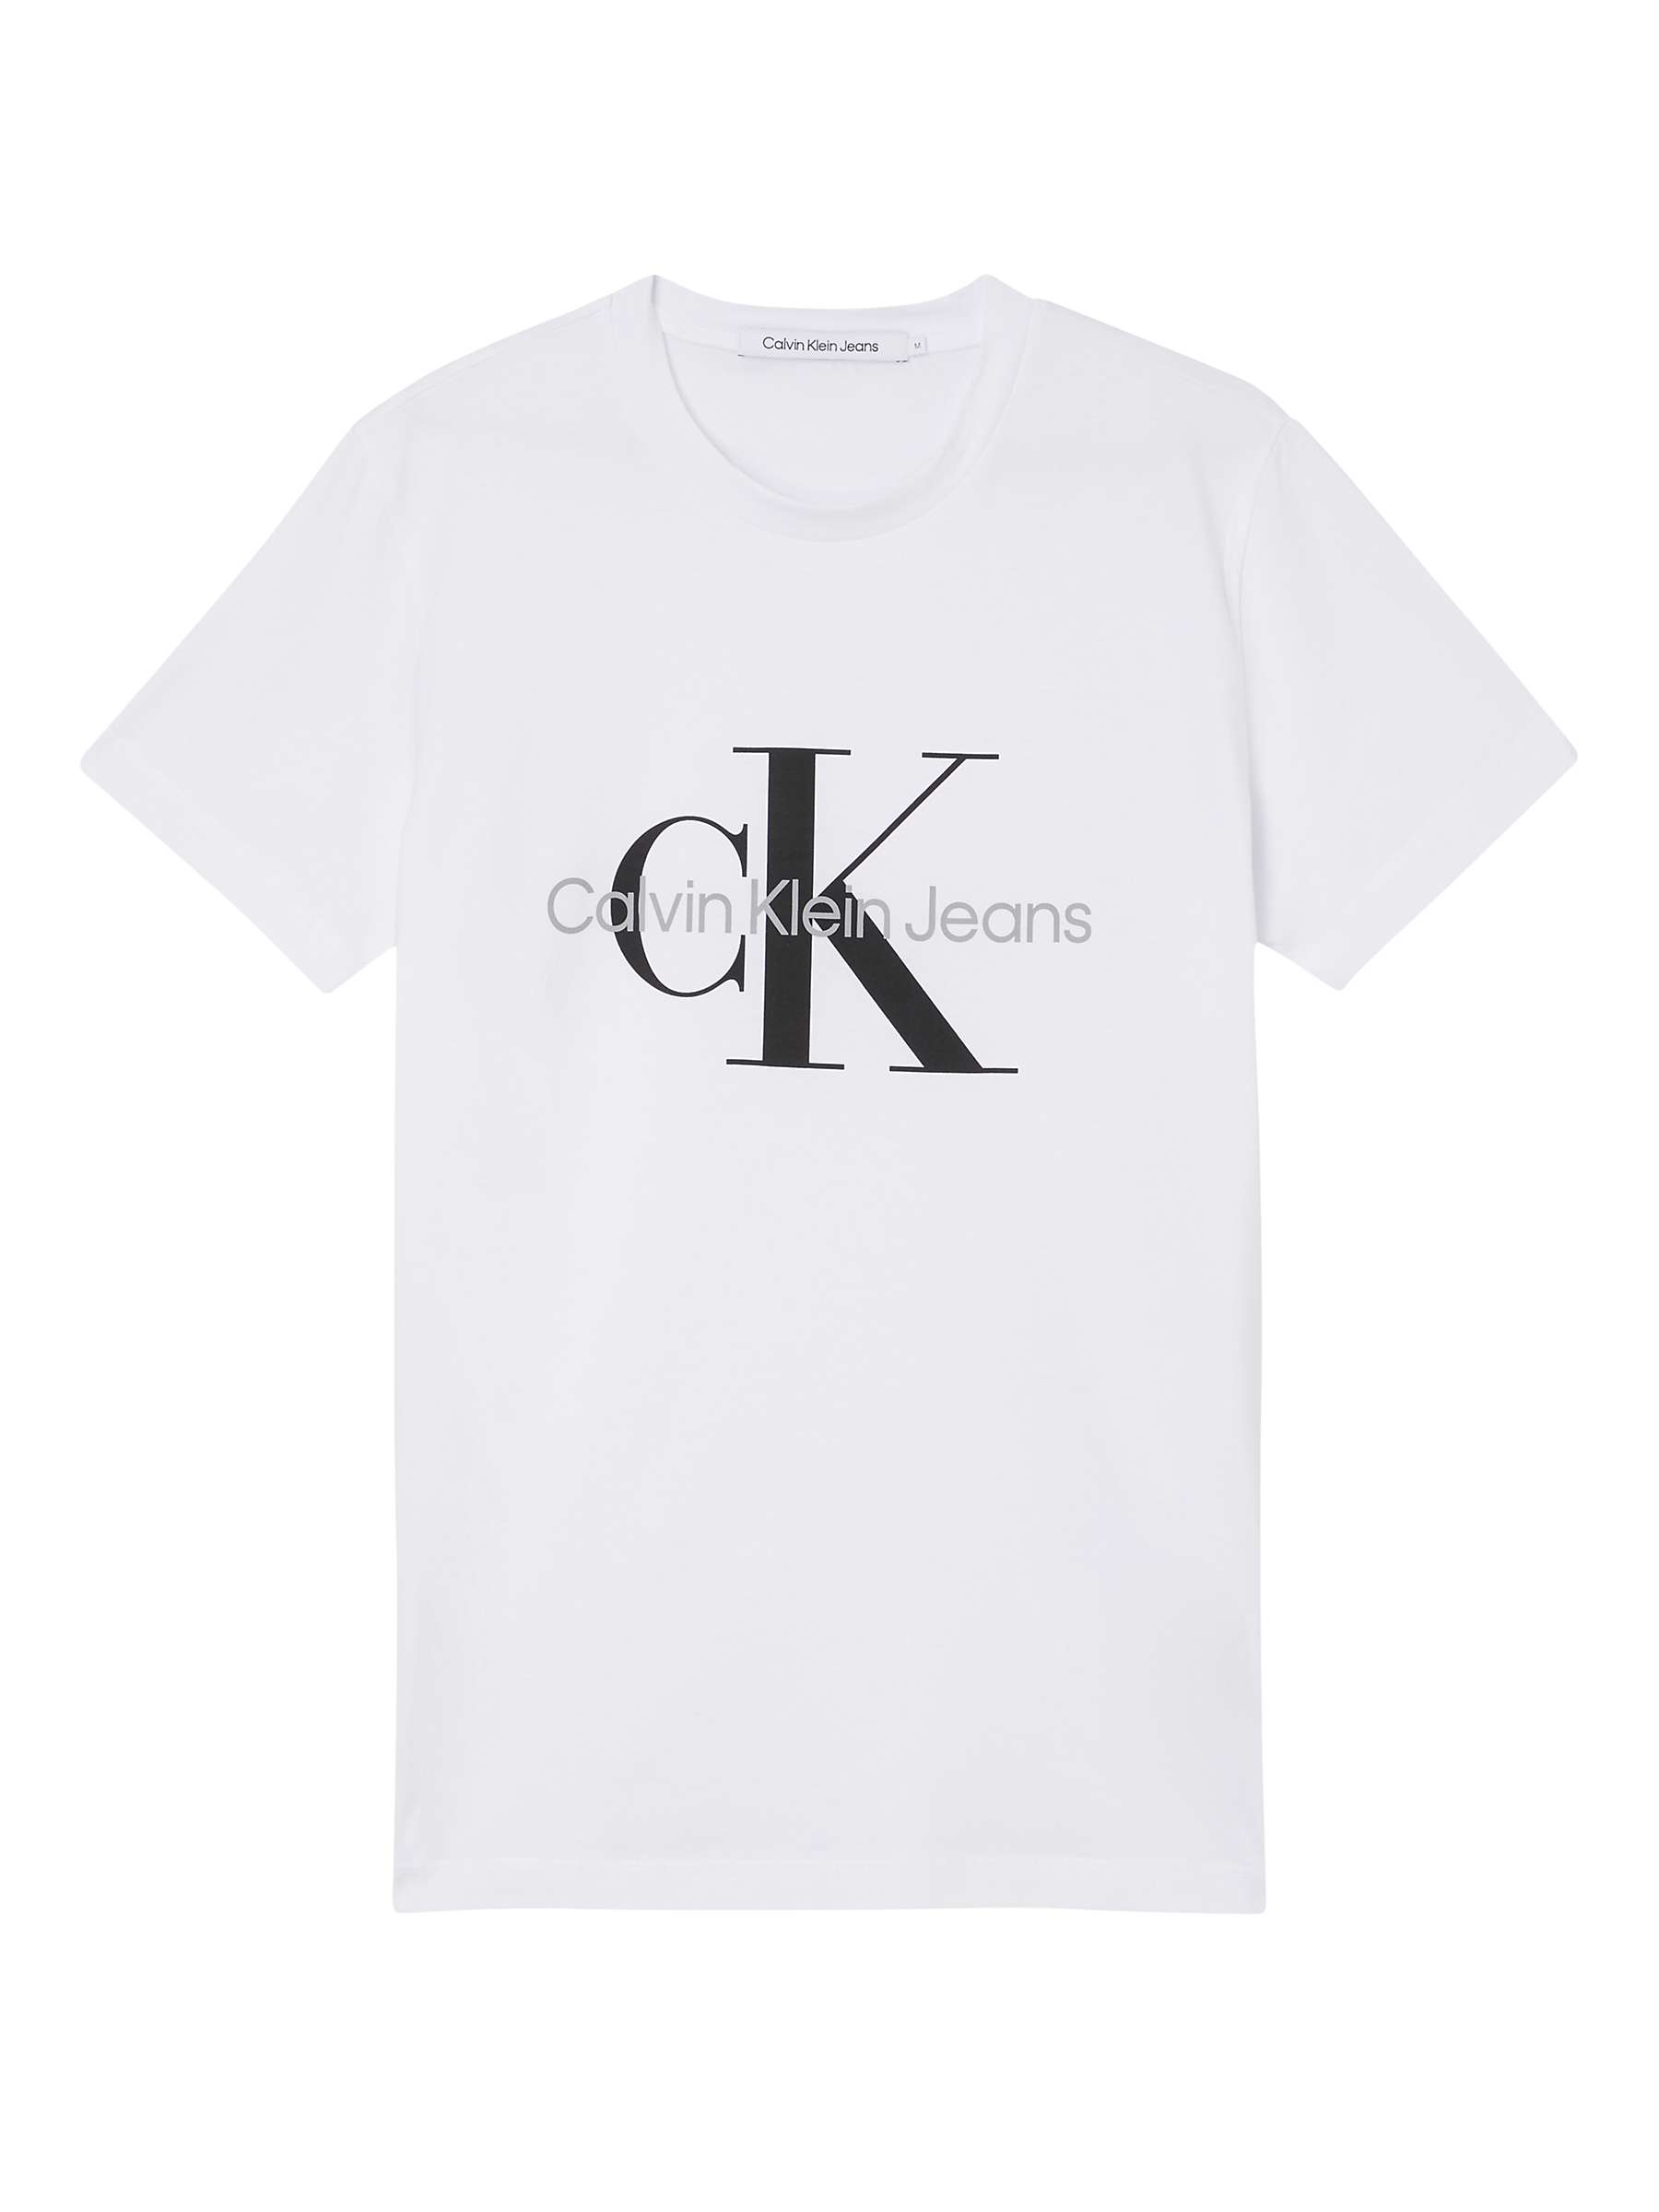 Calvin Klein Jeans Core Logo T-Shirt, Bright White at John Lewis & Partners